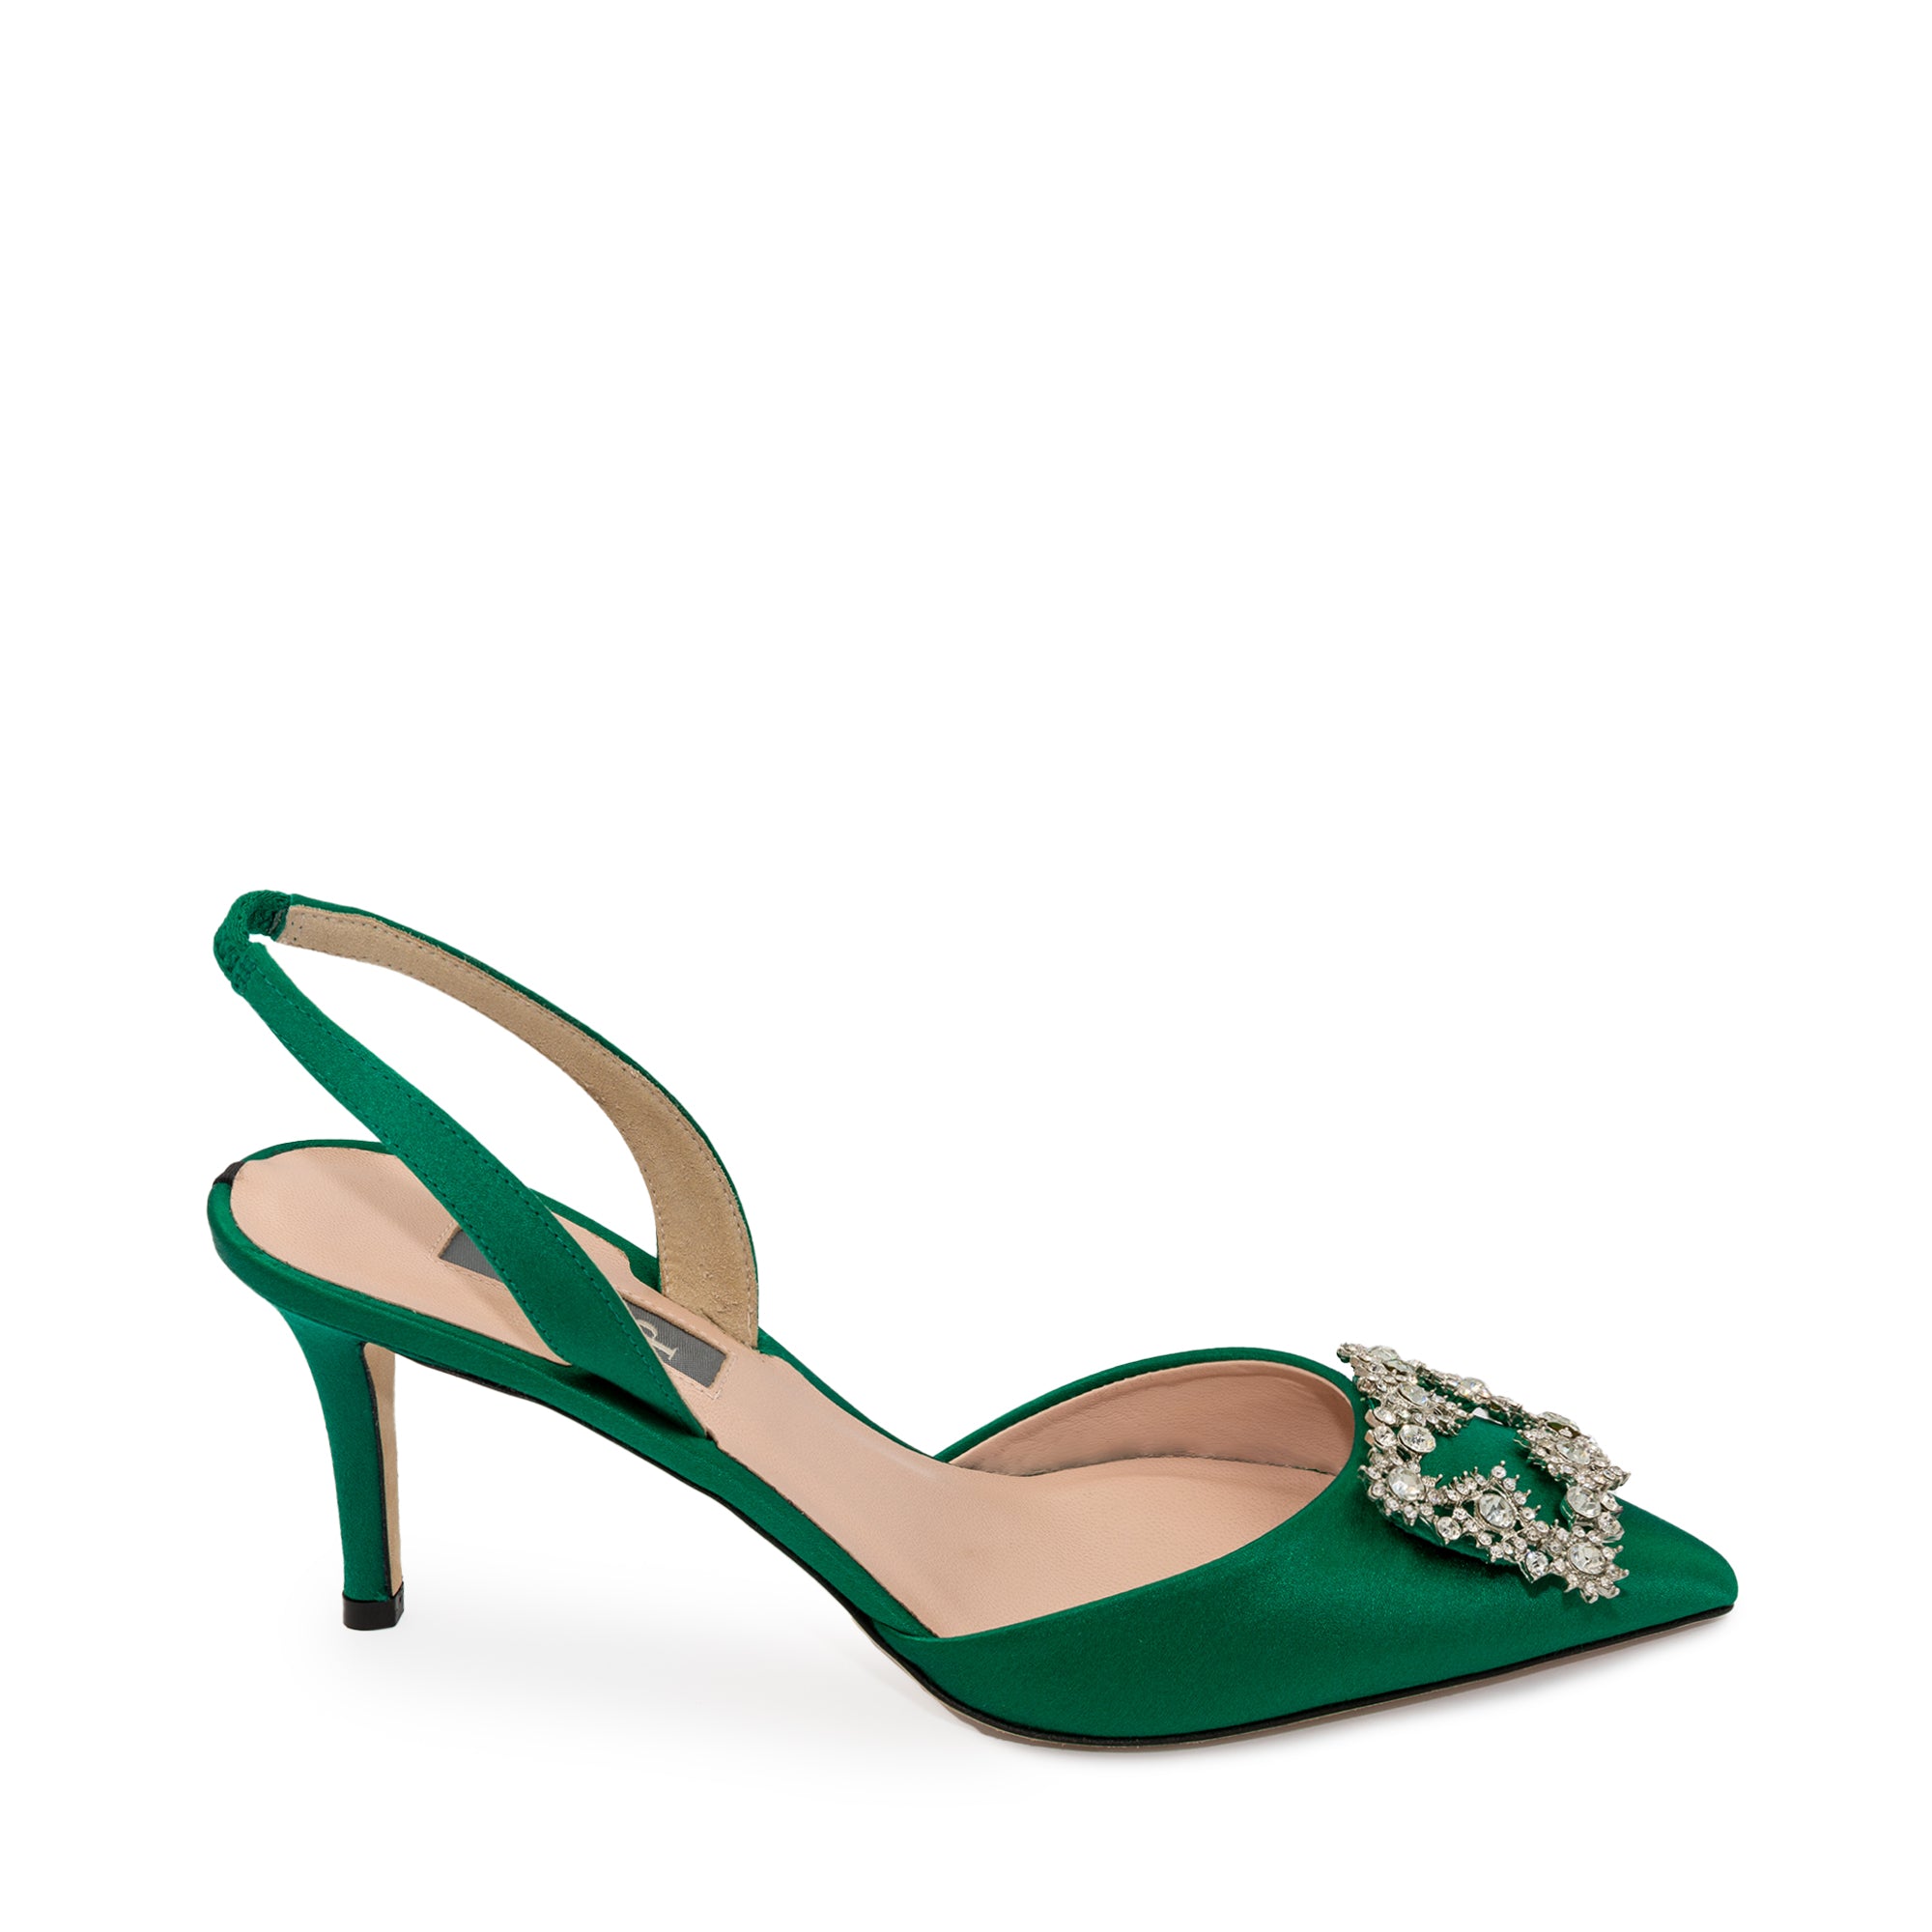 SJP by Sarah Jessica Parker Haifa 70mm Emerald Green Satin Slingbacks